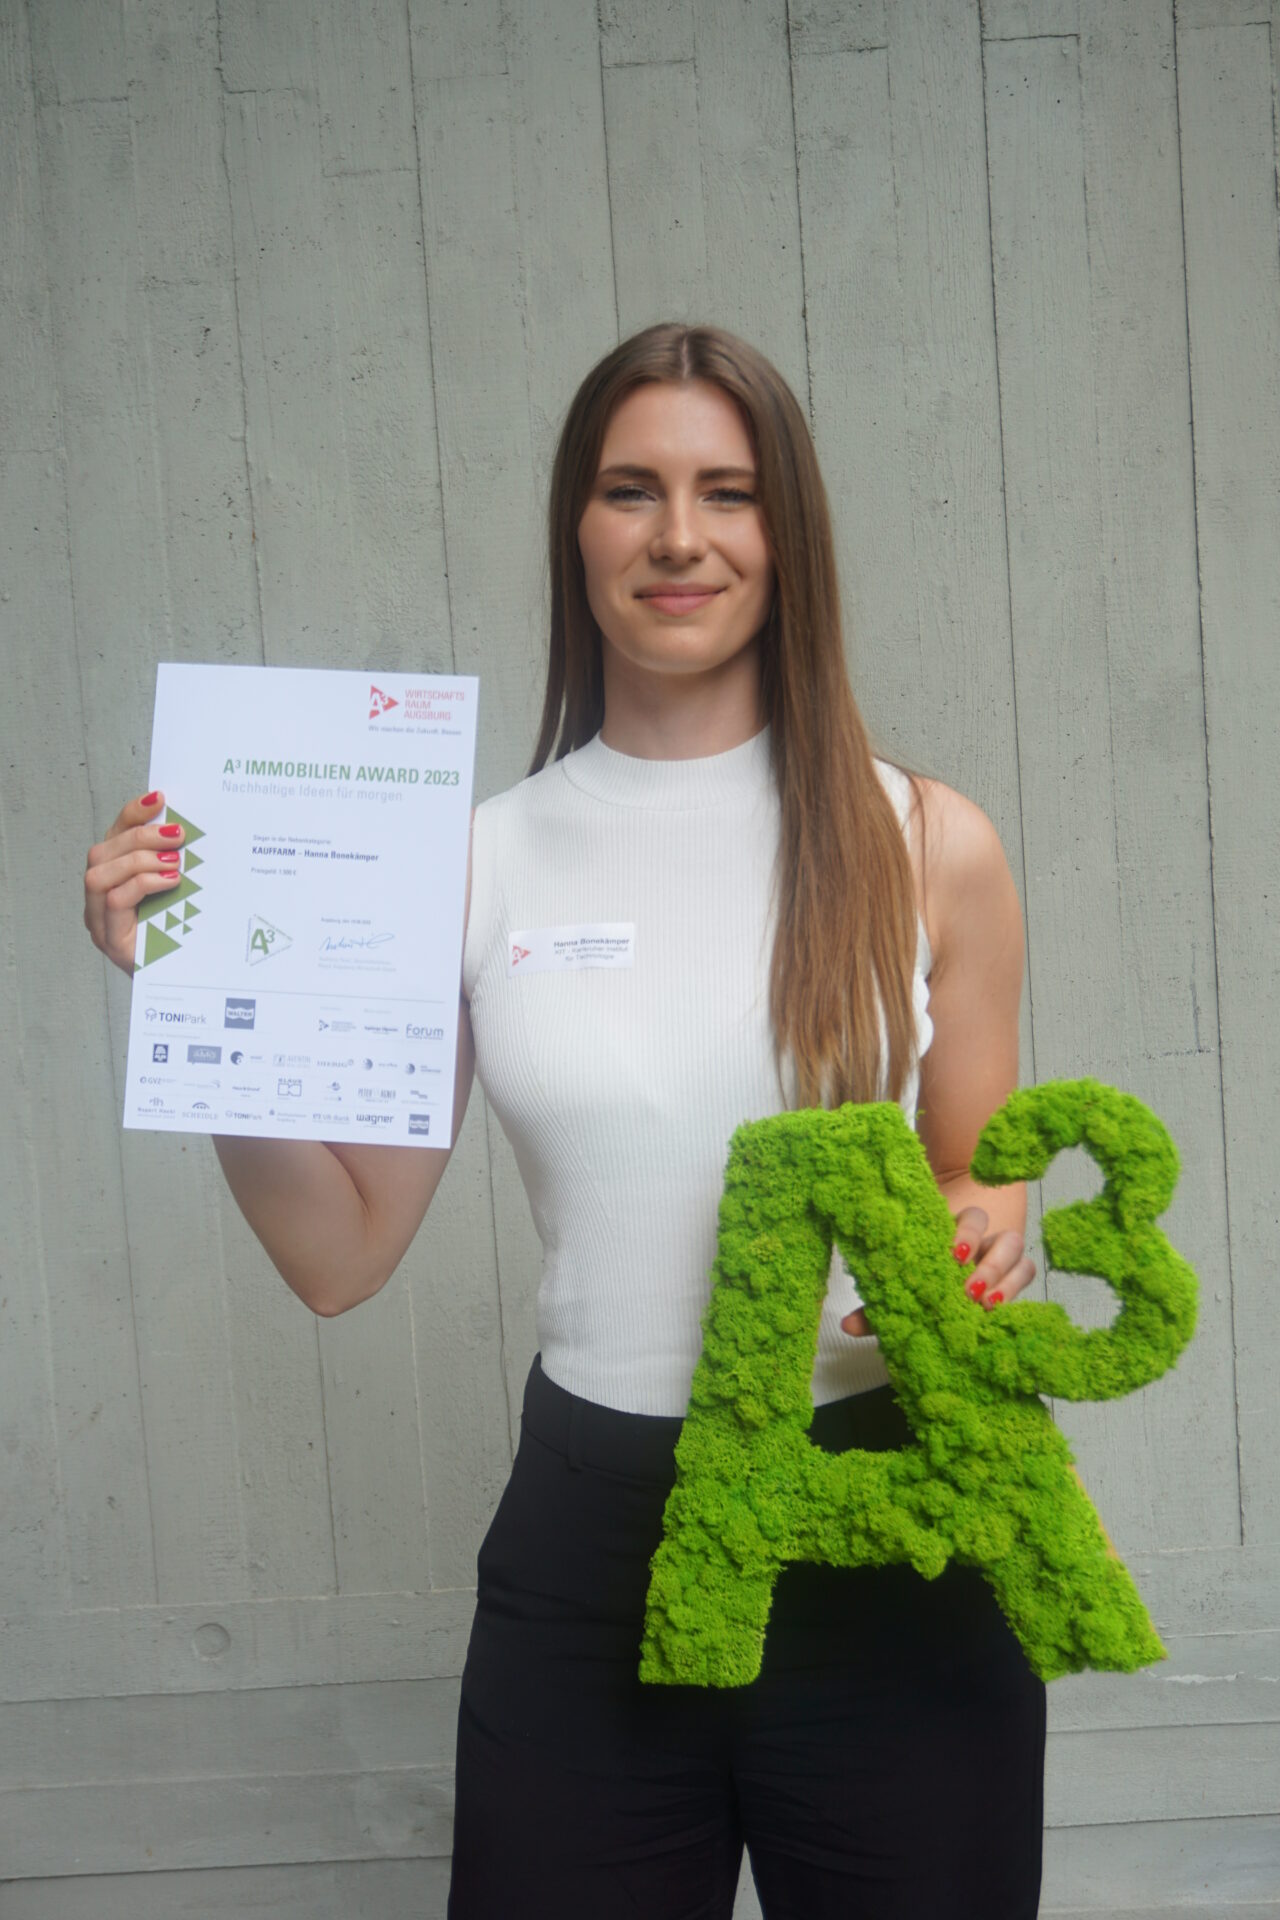 A³ Immobilien Award - Die Preisträgerin Hanna Bonekämper